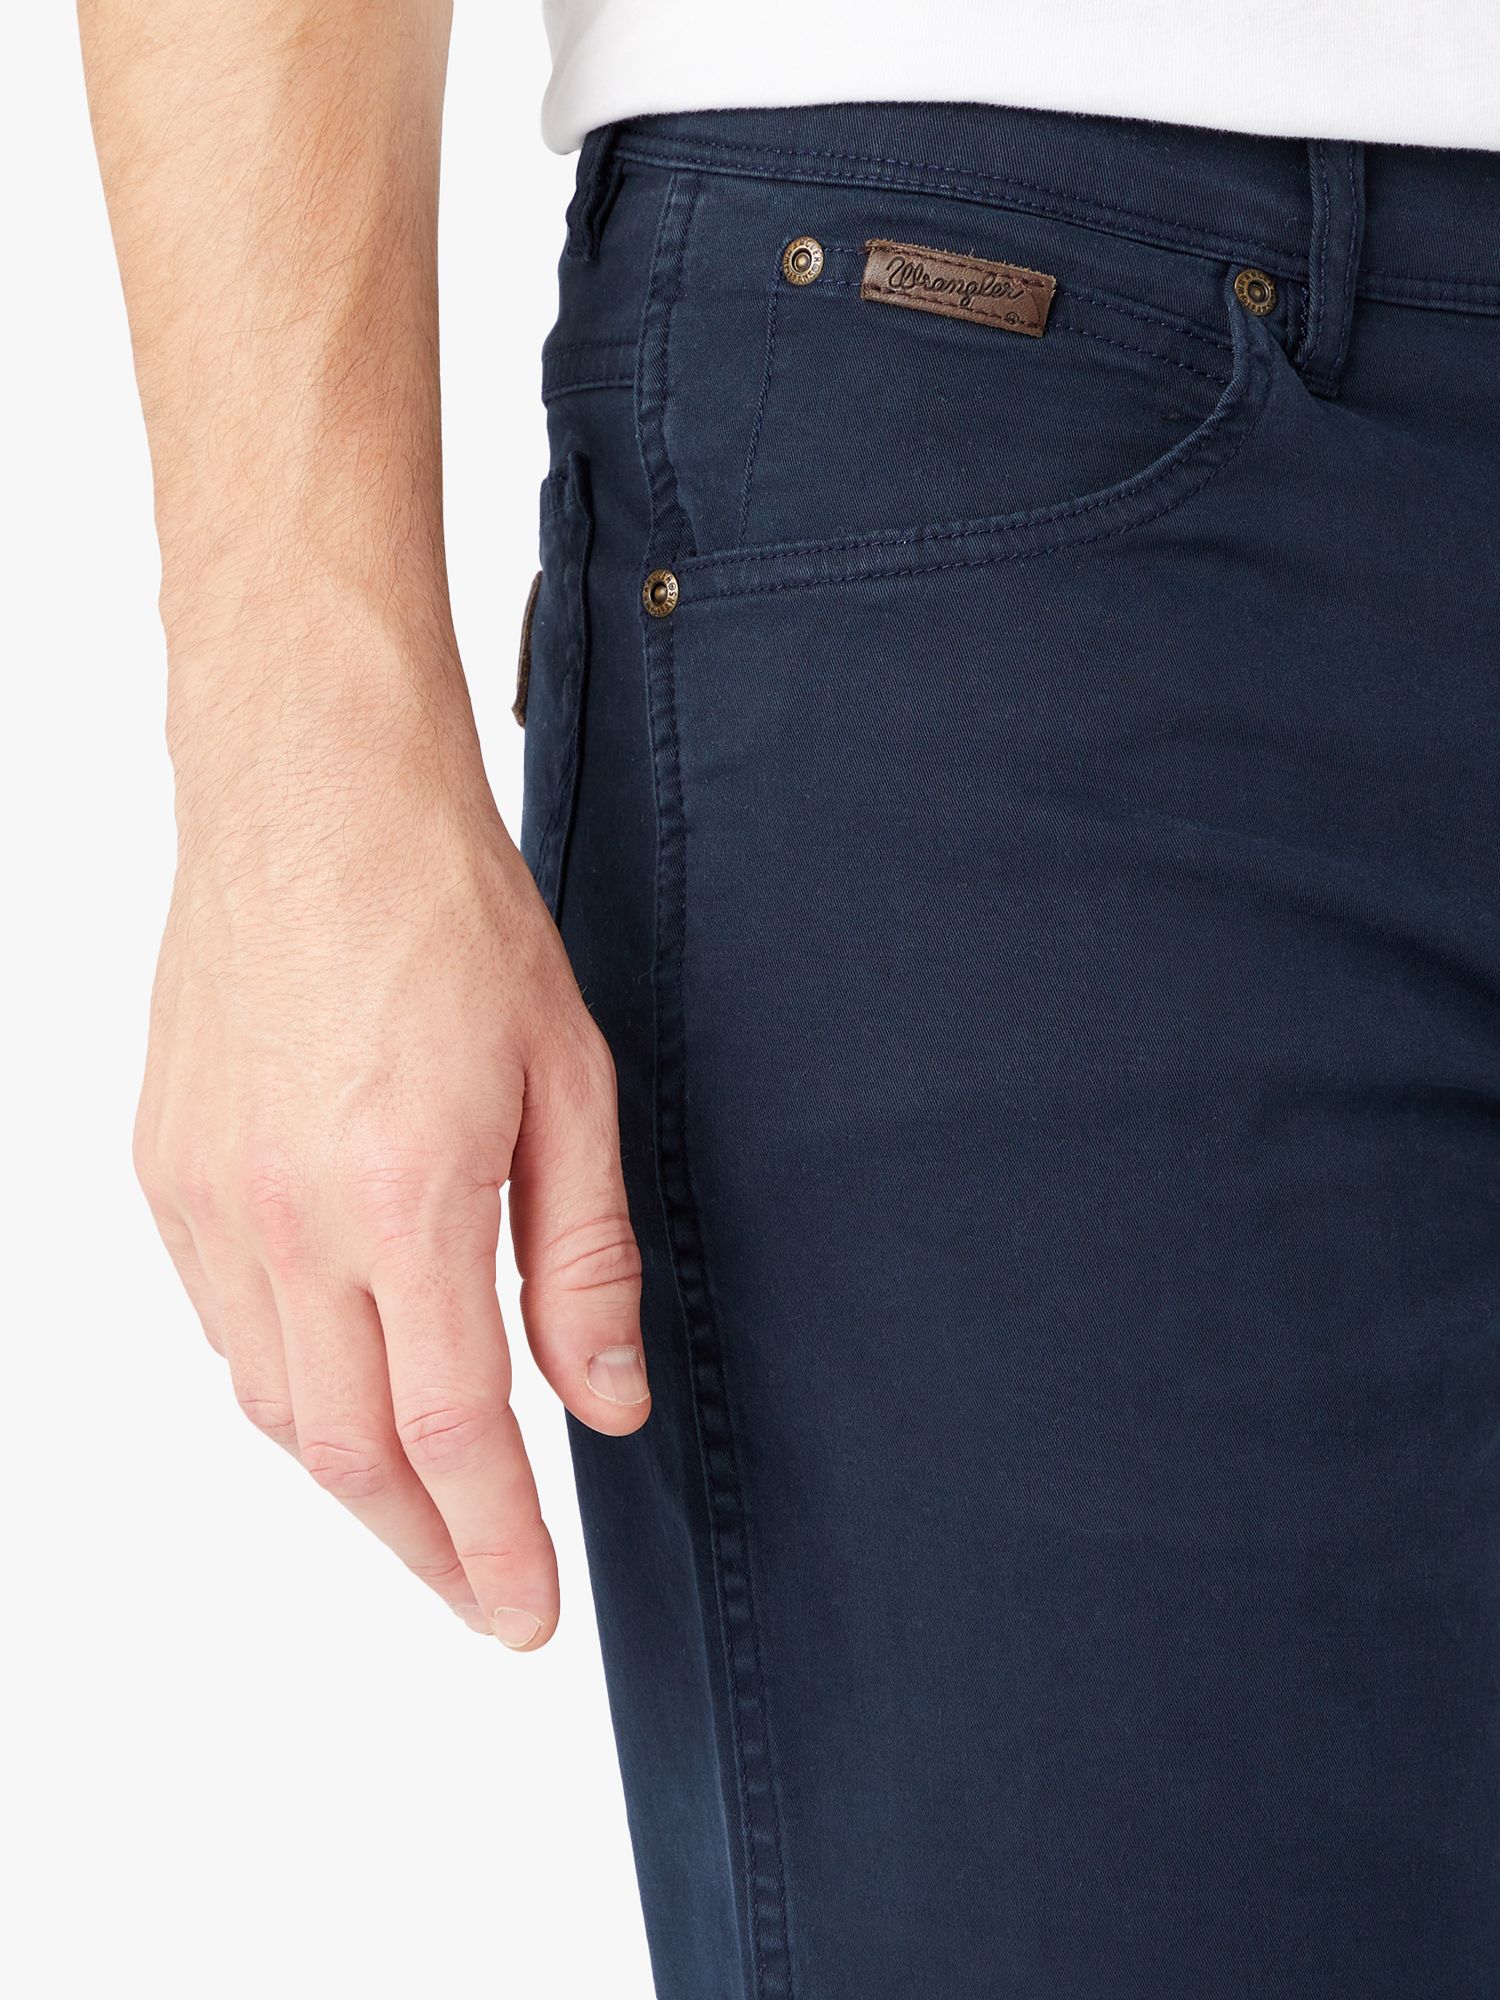 Wrangler Texas Slim Fit Jeans, Navy at John Lewis & Partners